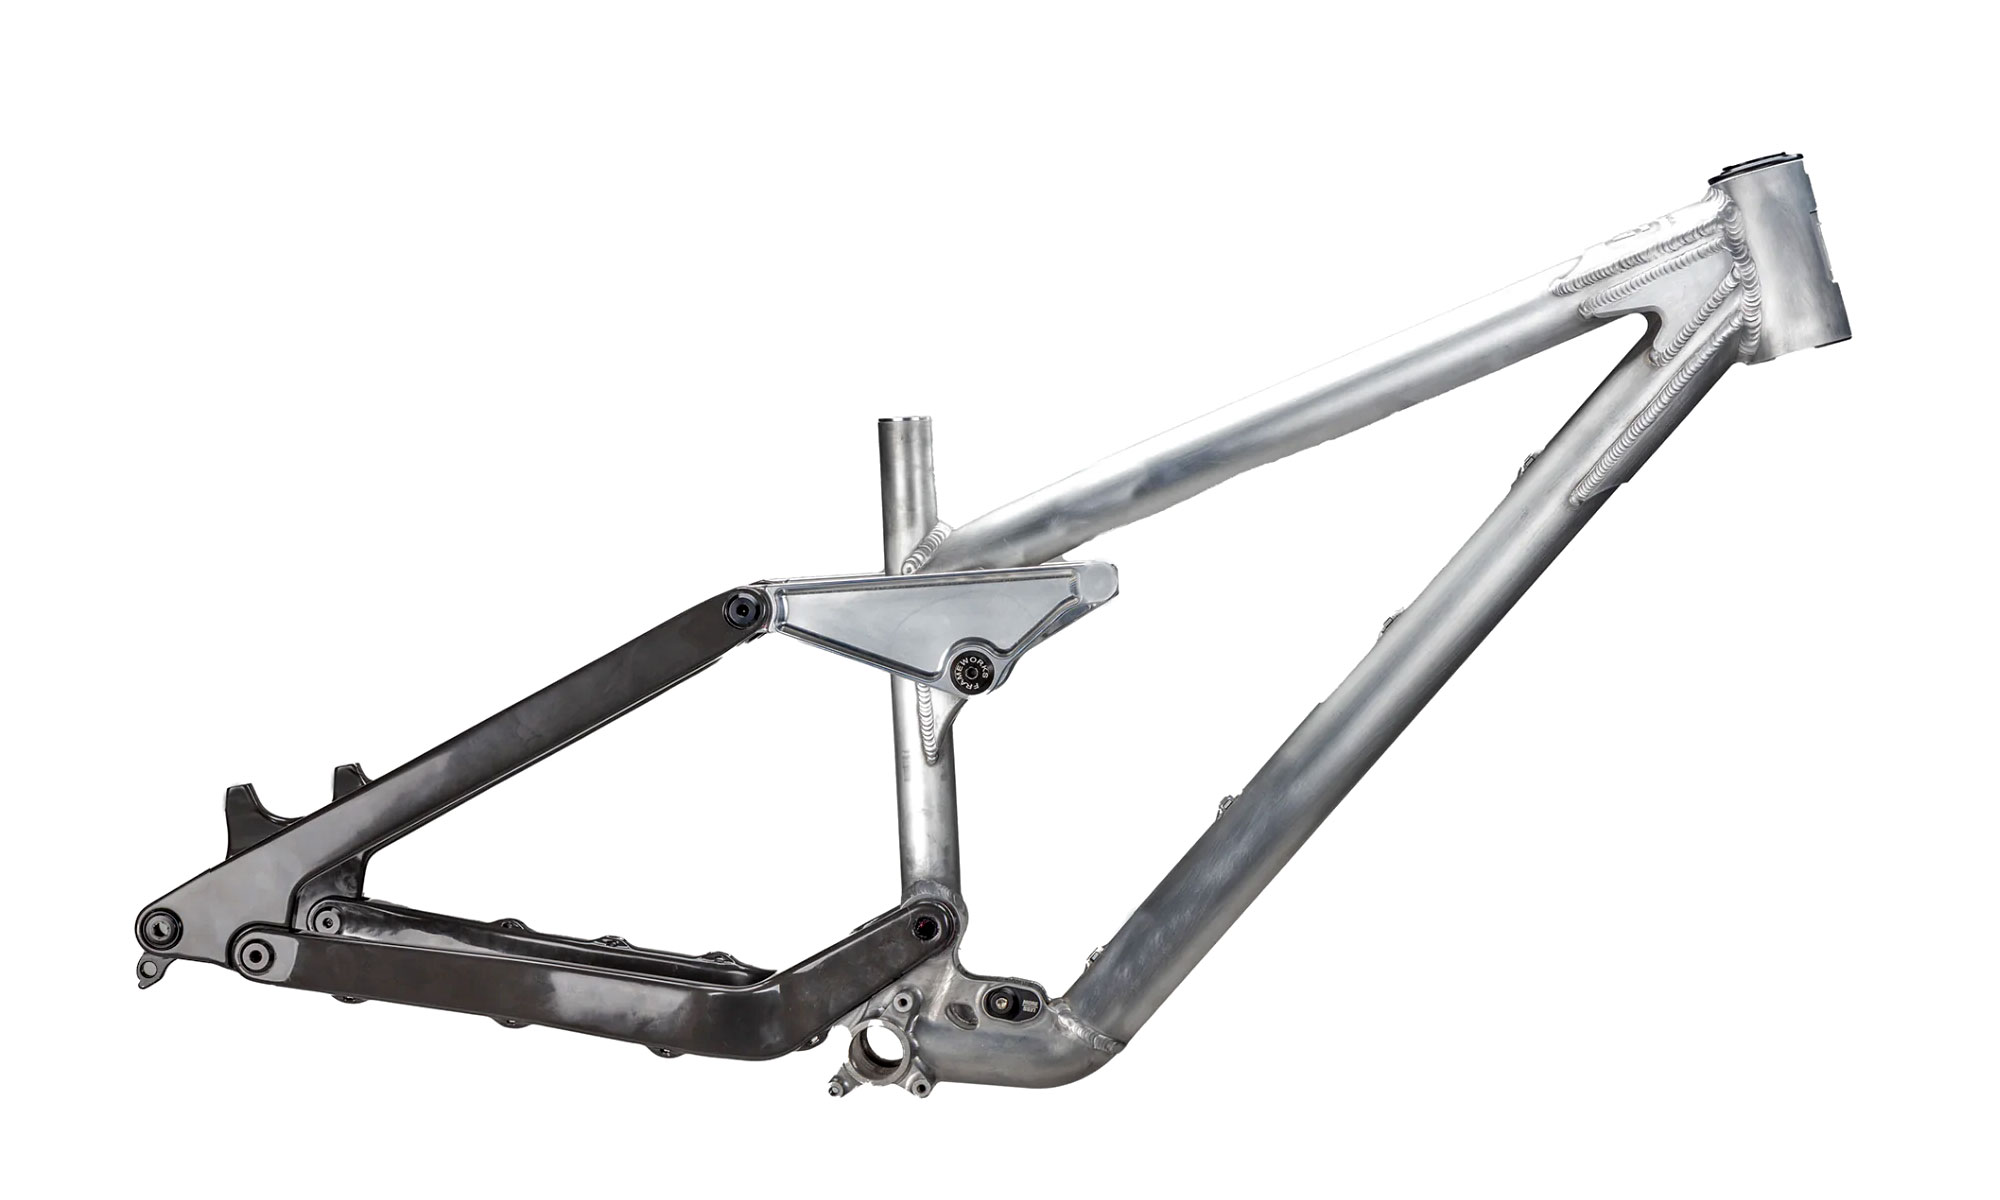 Frameworks DH bike frame, pre-order aluminum & carbon downhill bike project of Neko Mulally, frame ONLY